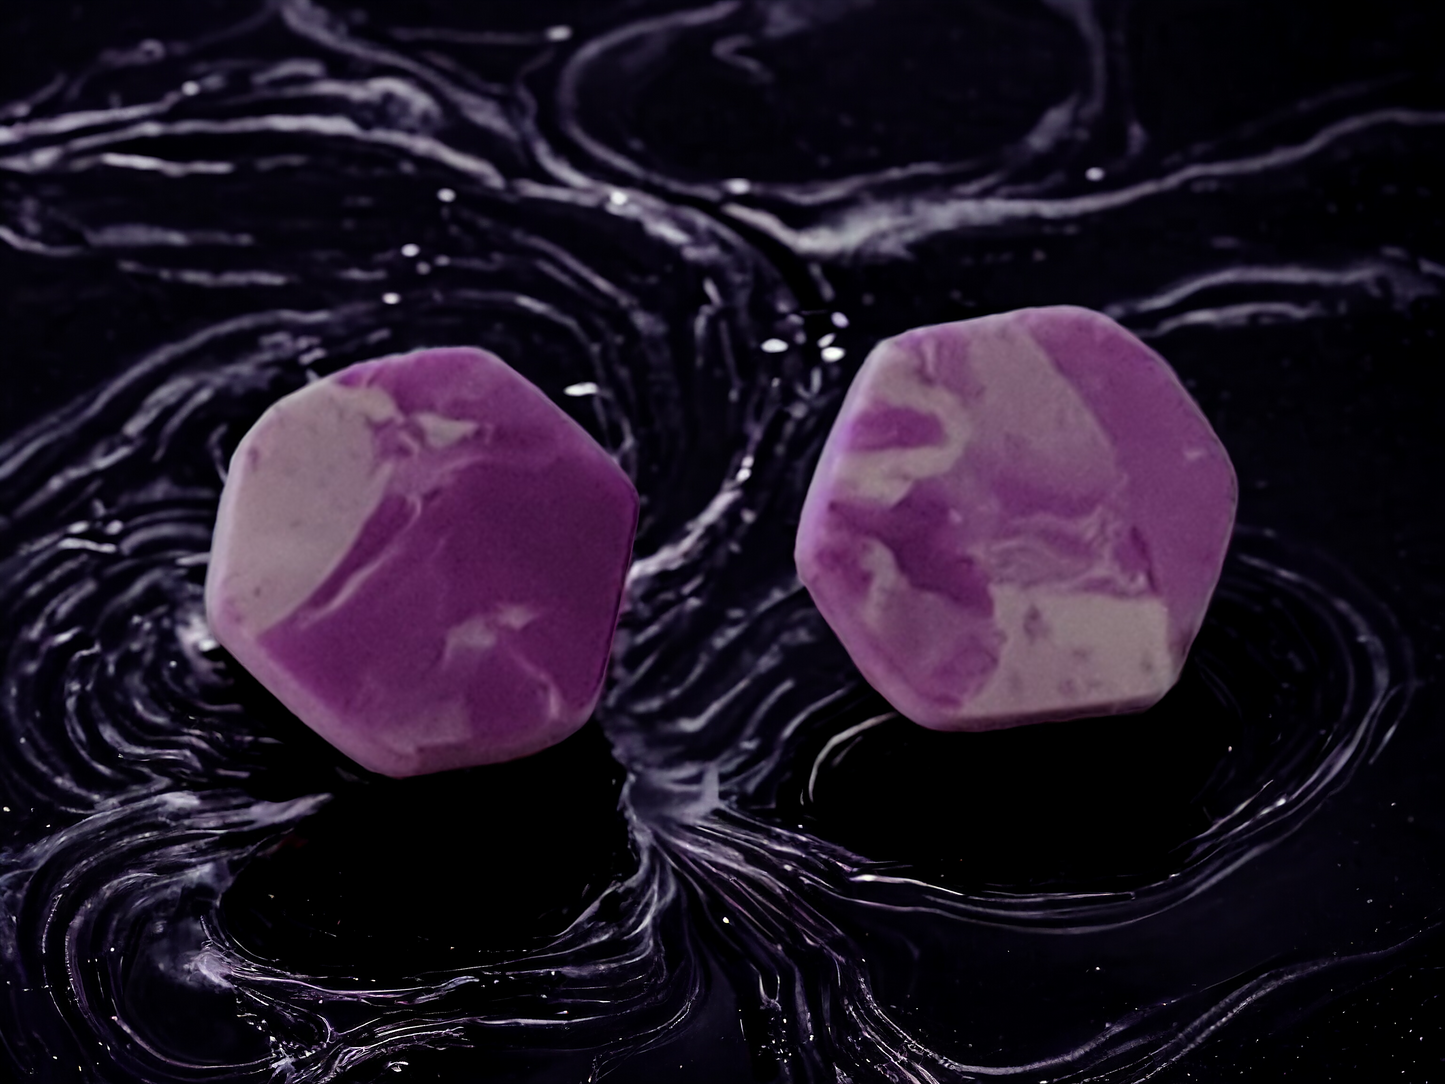 Purple Marbled Stud Earrings